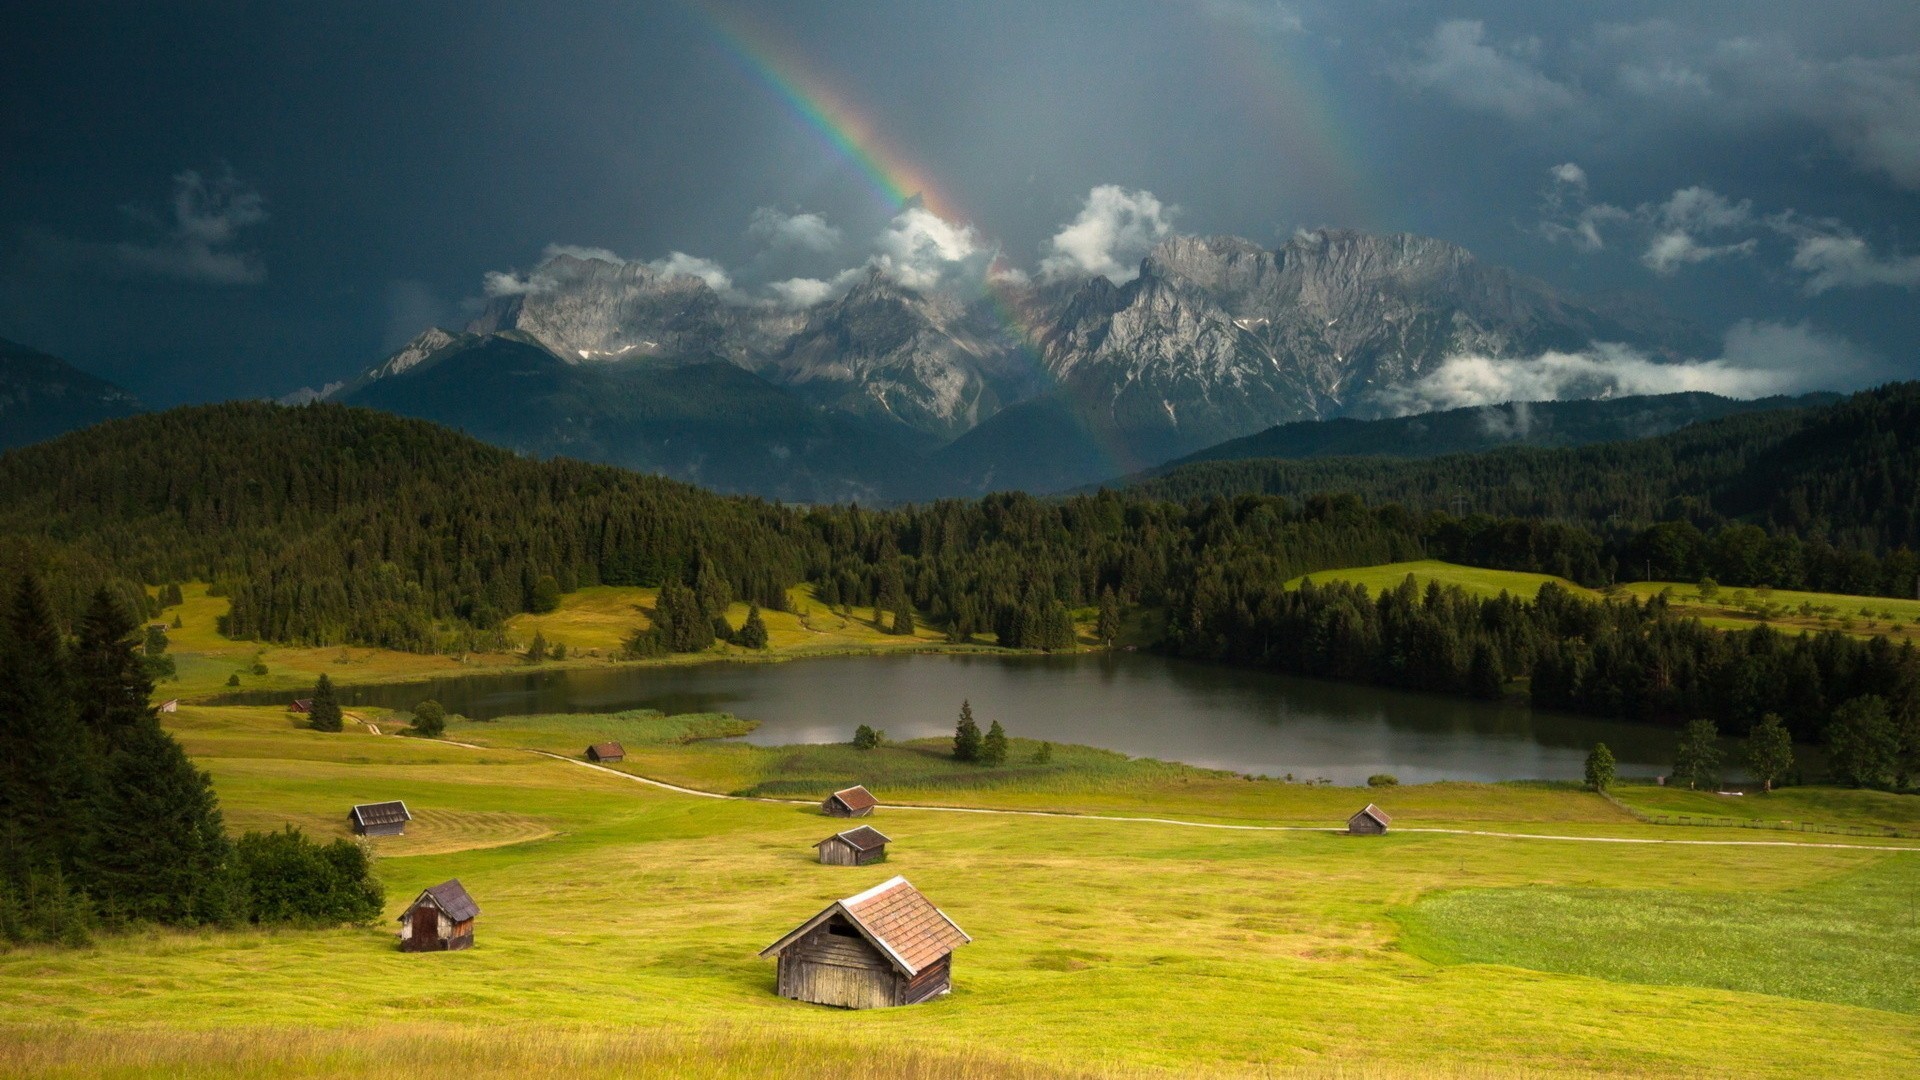 General 1920x1080 rainbows hills forest grass lake clouds sky idyllic hut